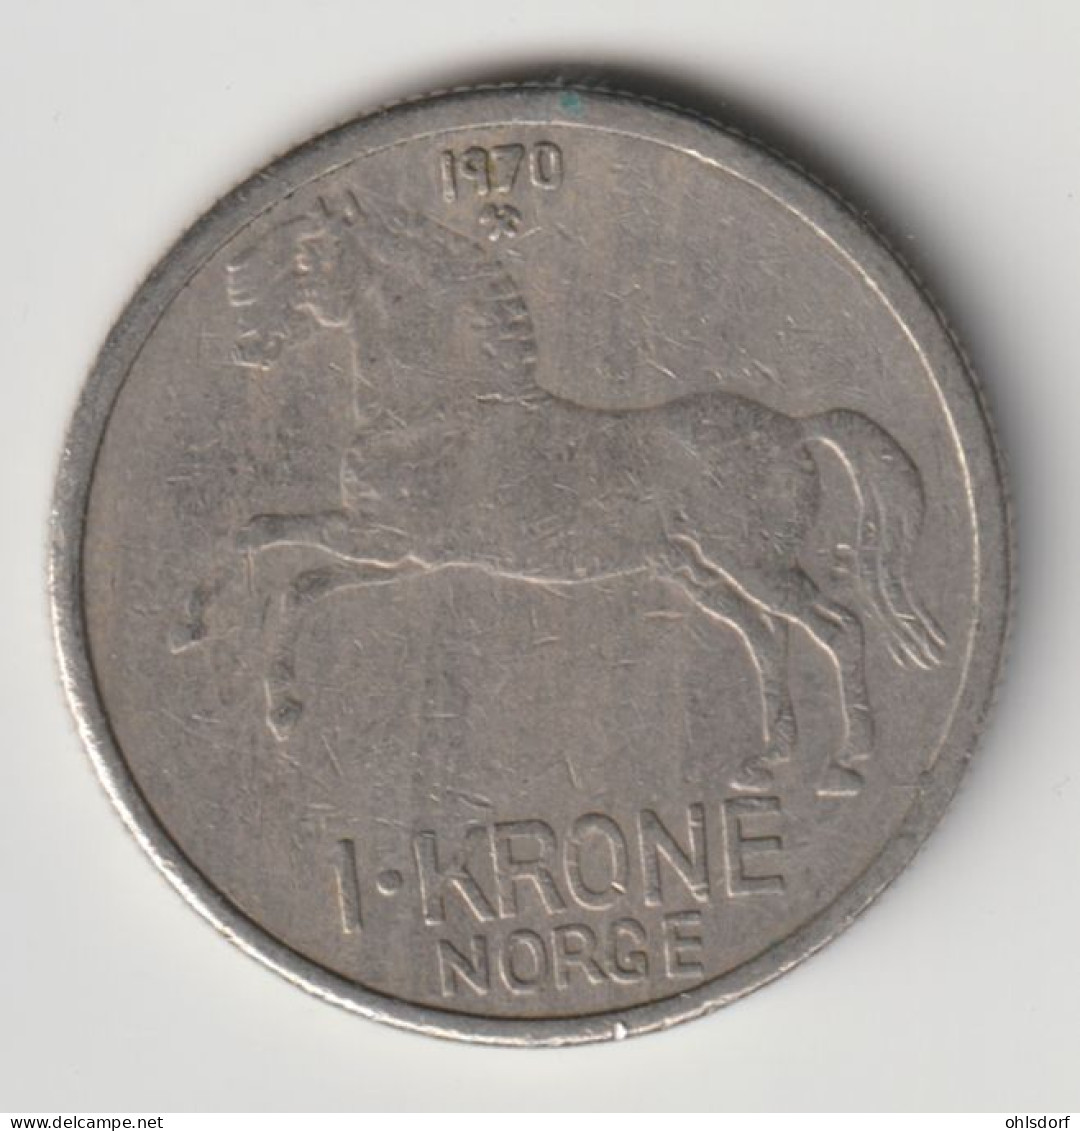 NORGE 1970: 1 Krone, KM 409 - Norway